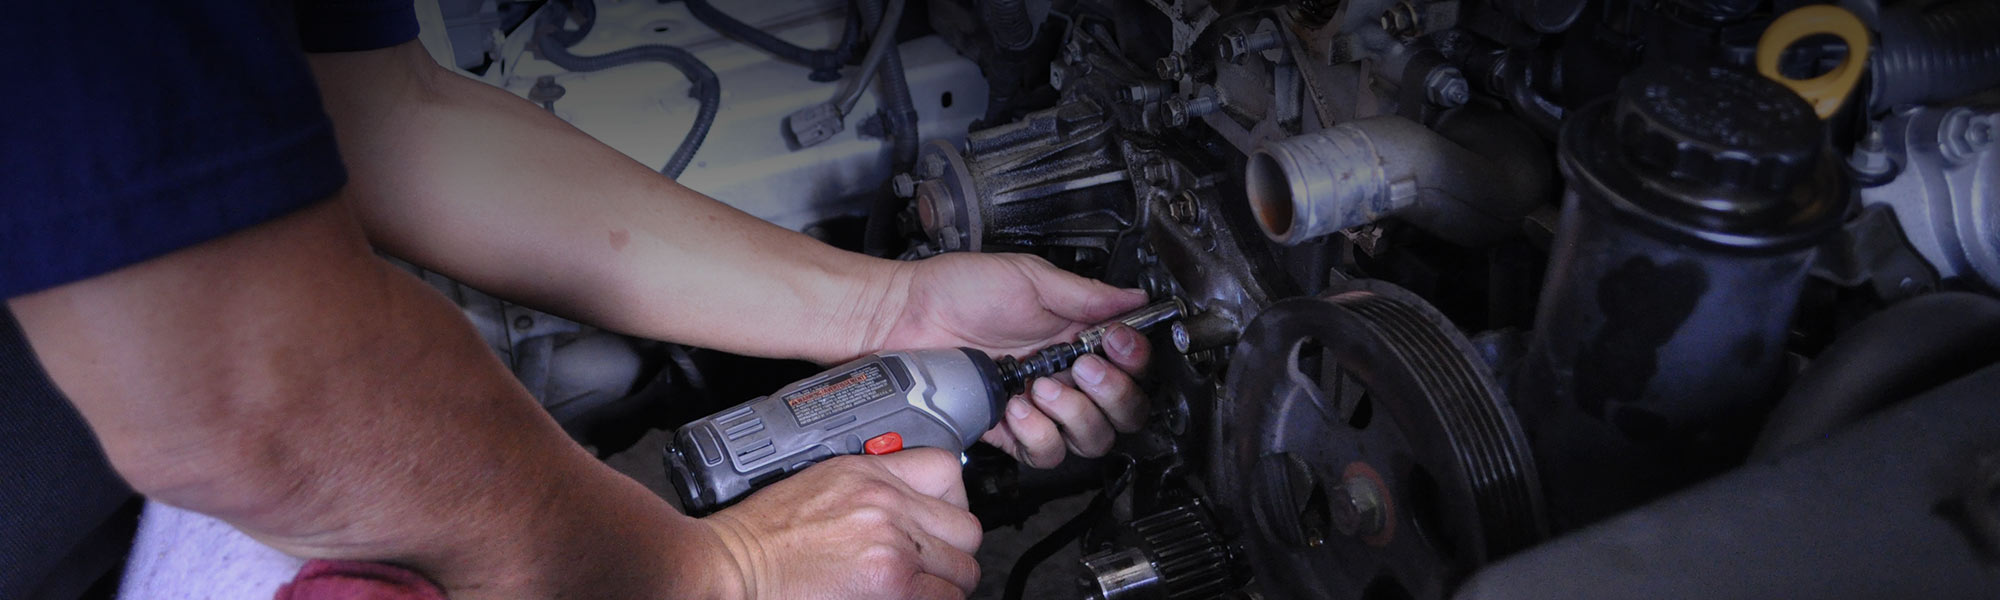 image of mechanic repairing car engine